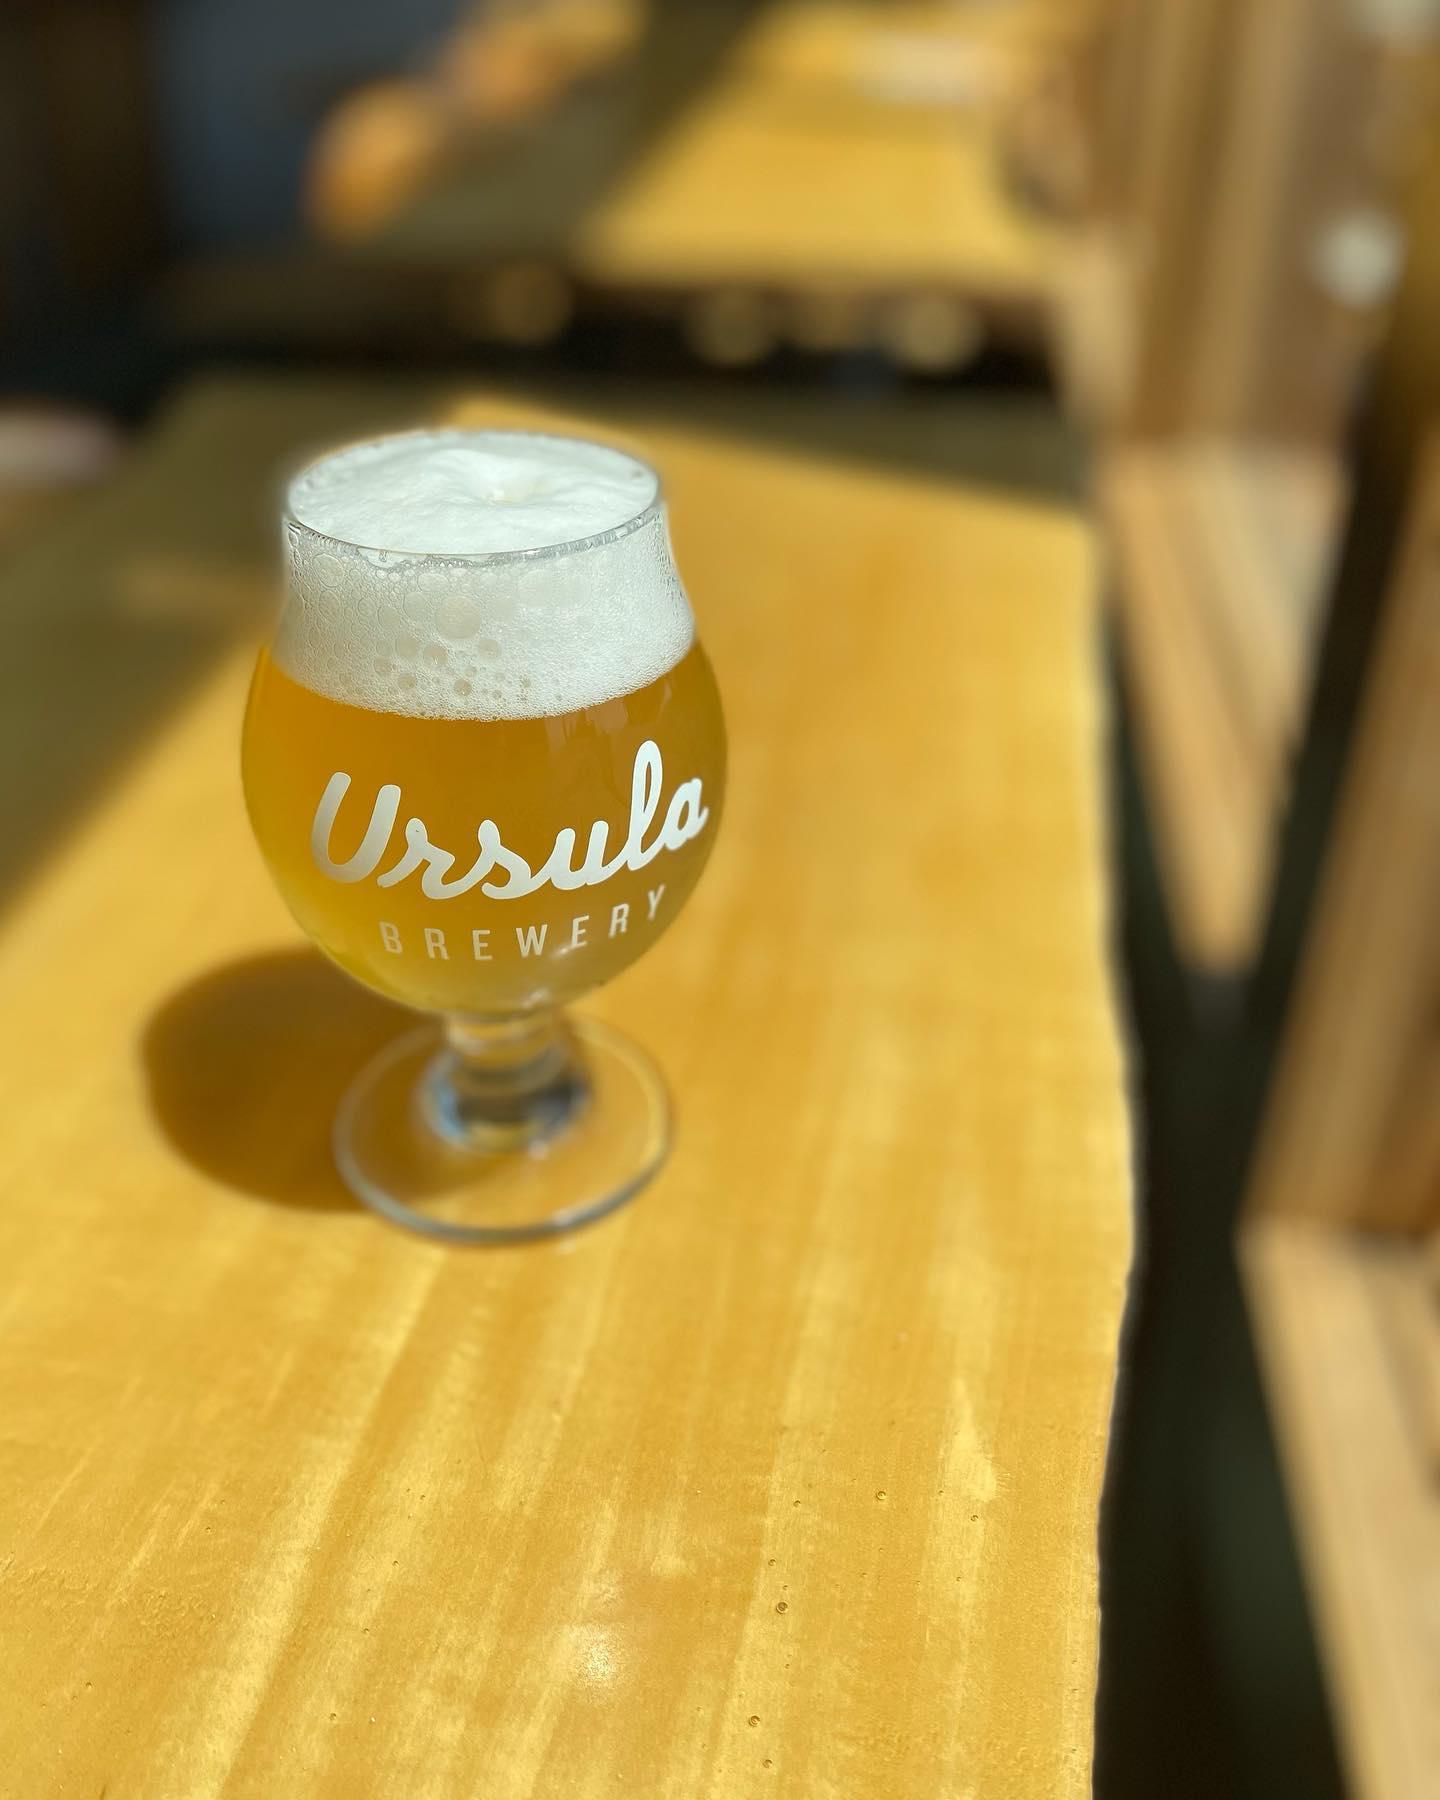 Pet Friendly Ursula Brewery